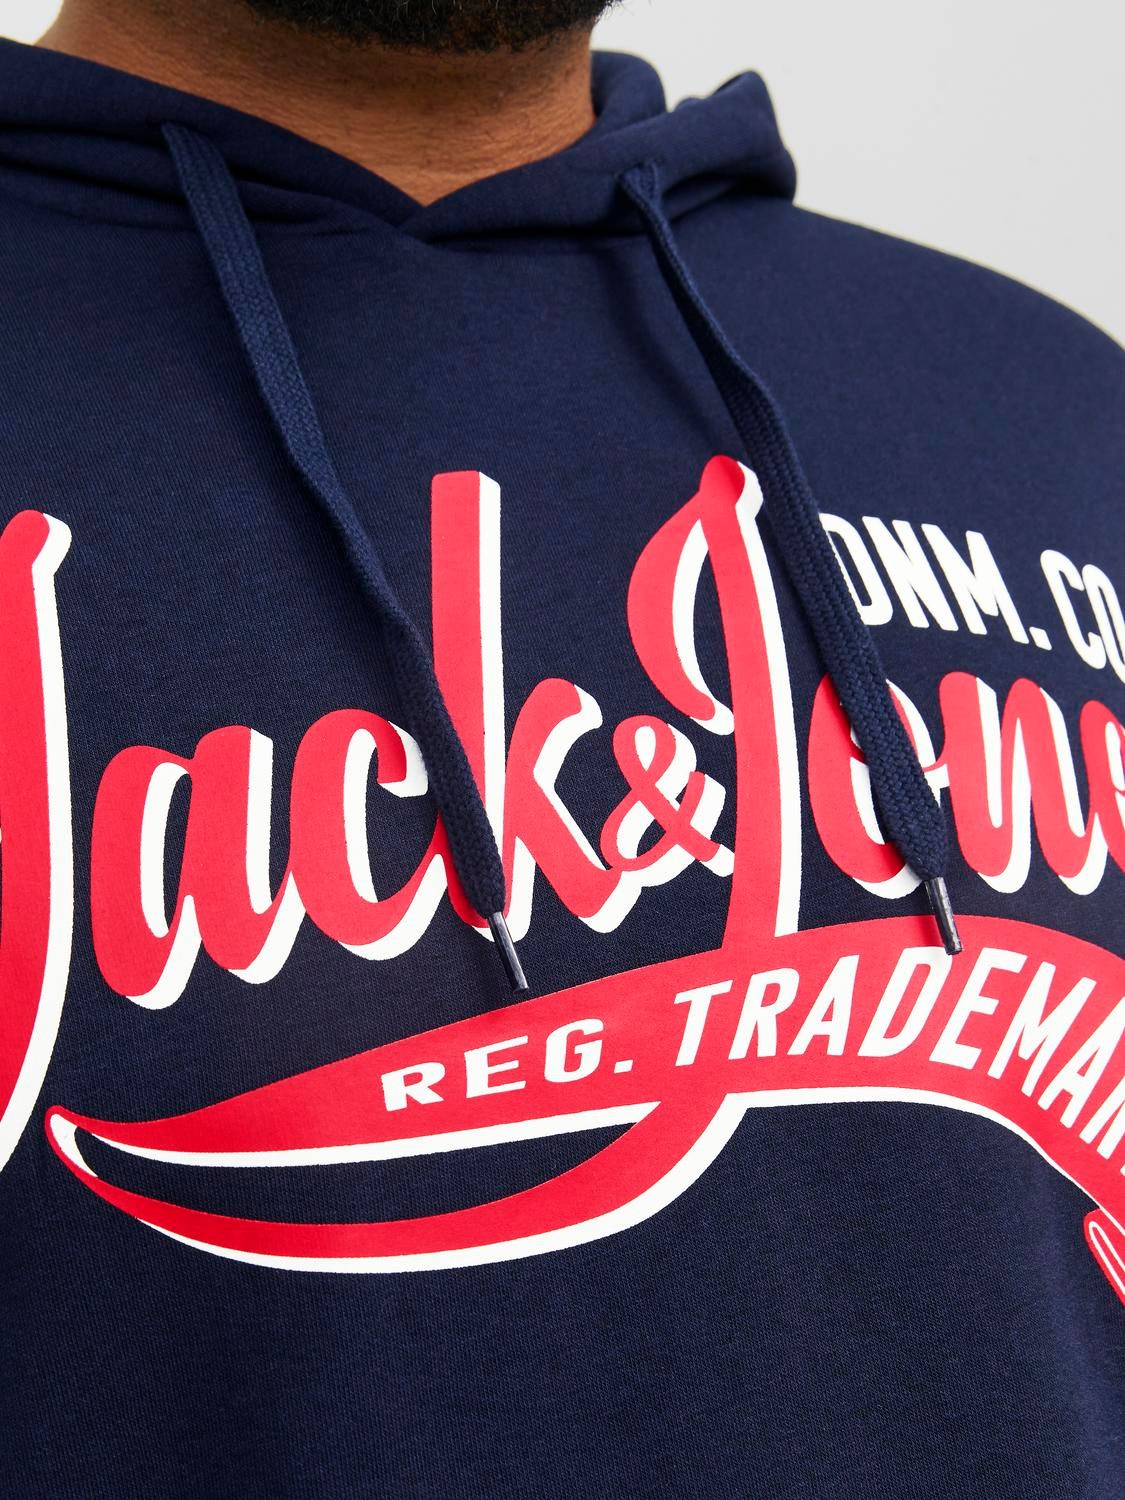 Jack & Jones Plus Size Logo Hoodie -Navy Blazer - 12236803